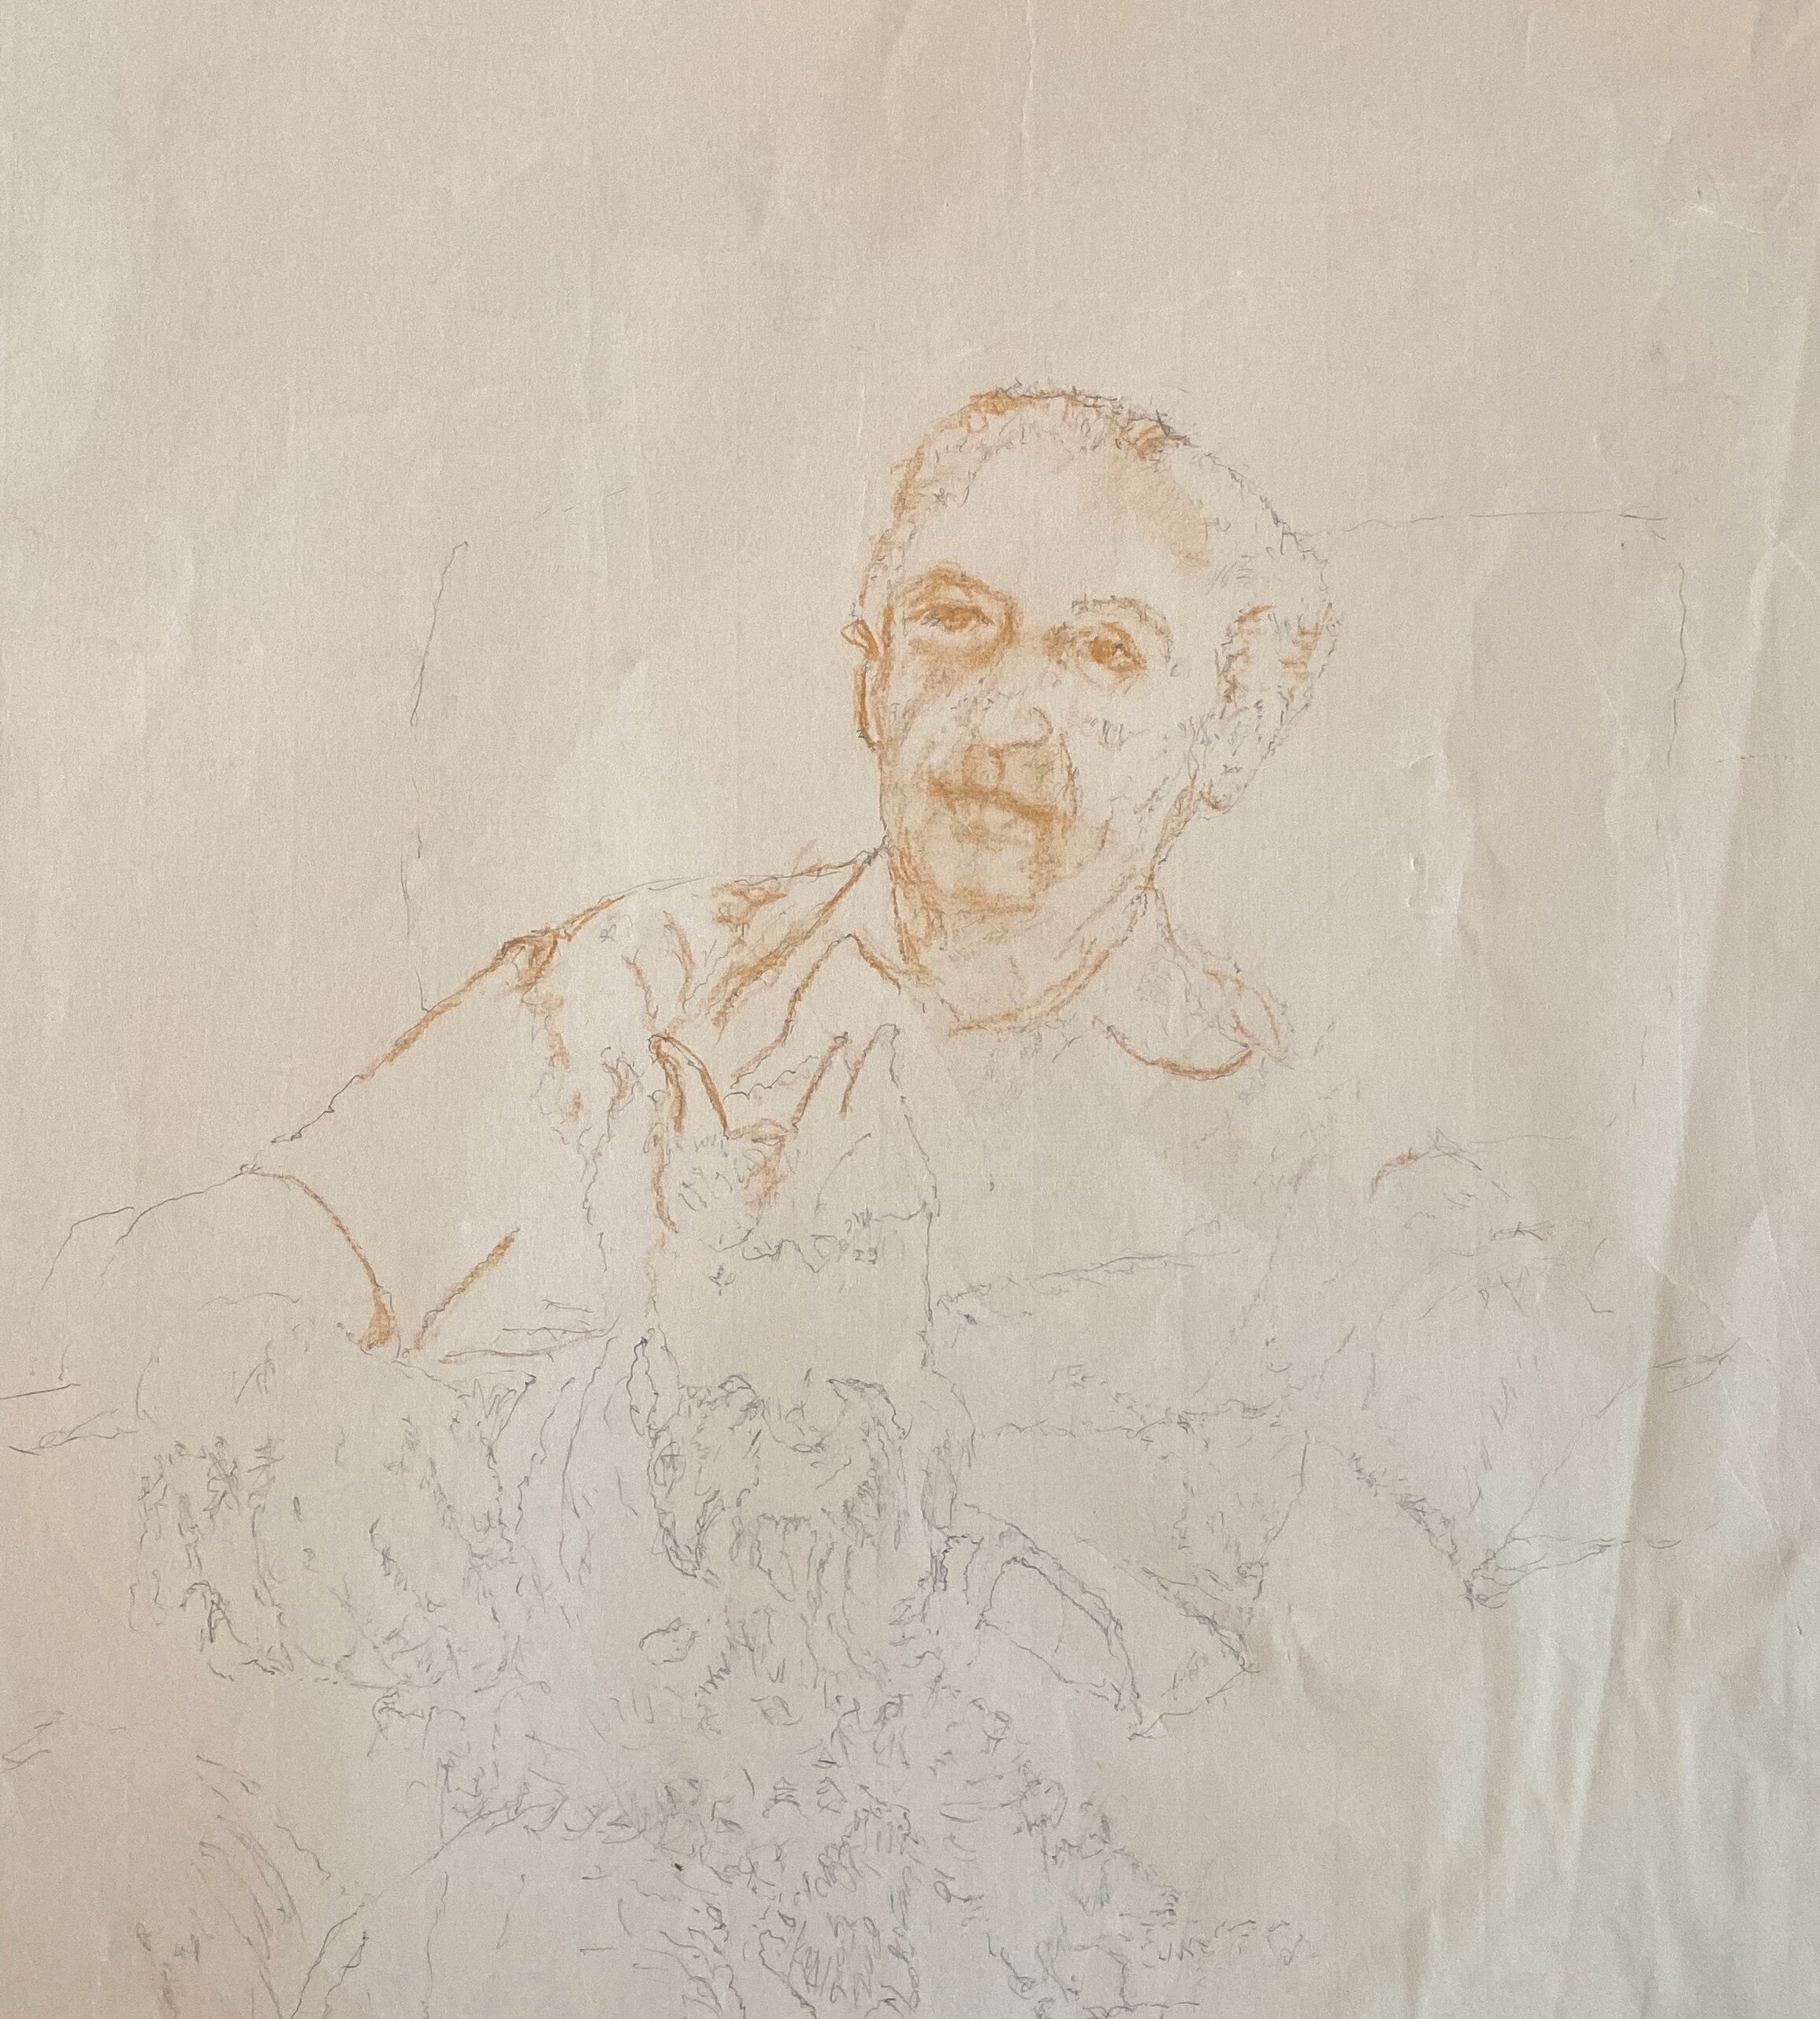   Description:   Portrait of man   Medium:   Pastel on paper   Dimensions:    H: 25.5 in   W: 19.5 in 